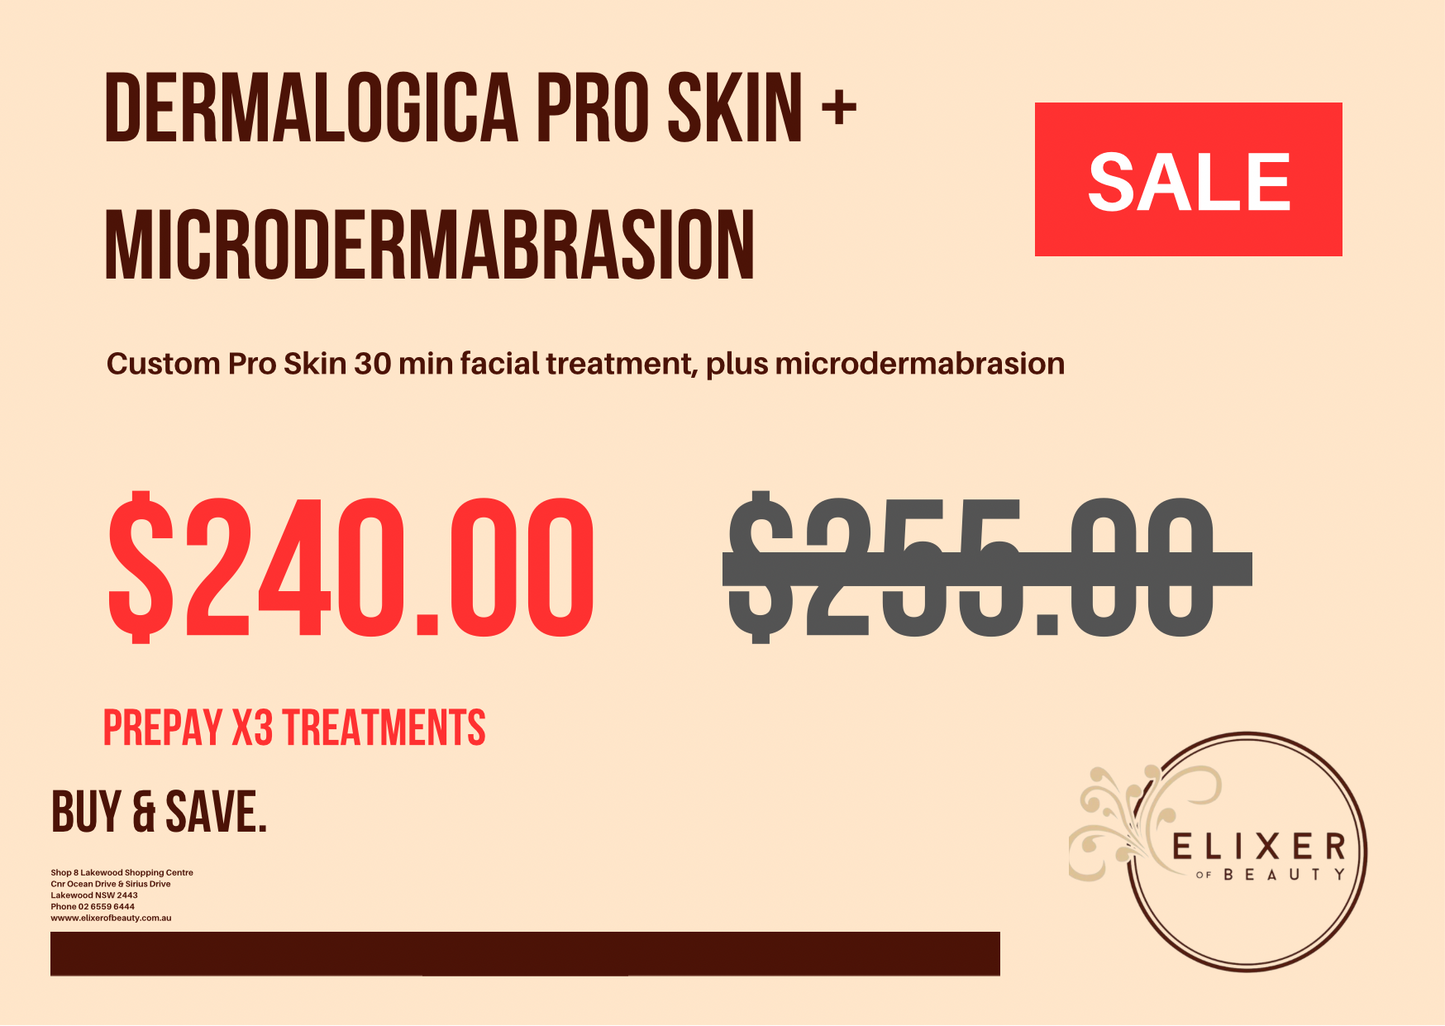 Pre-pay x3 Dermalogica Pro Skin + microdermabrasion. Custom (30 min) facial treatment, plus microdermabrasion.